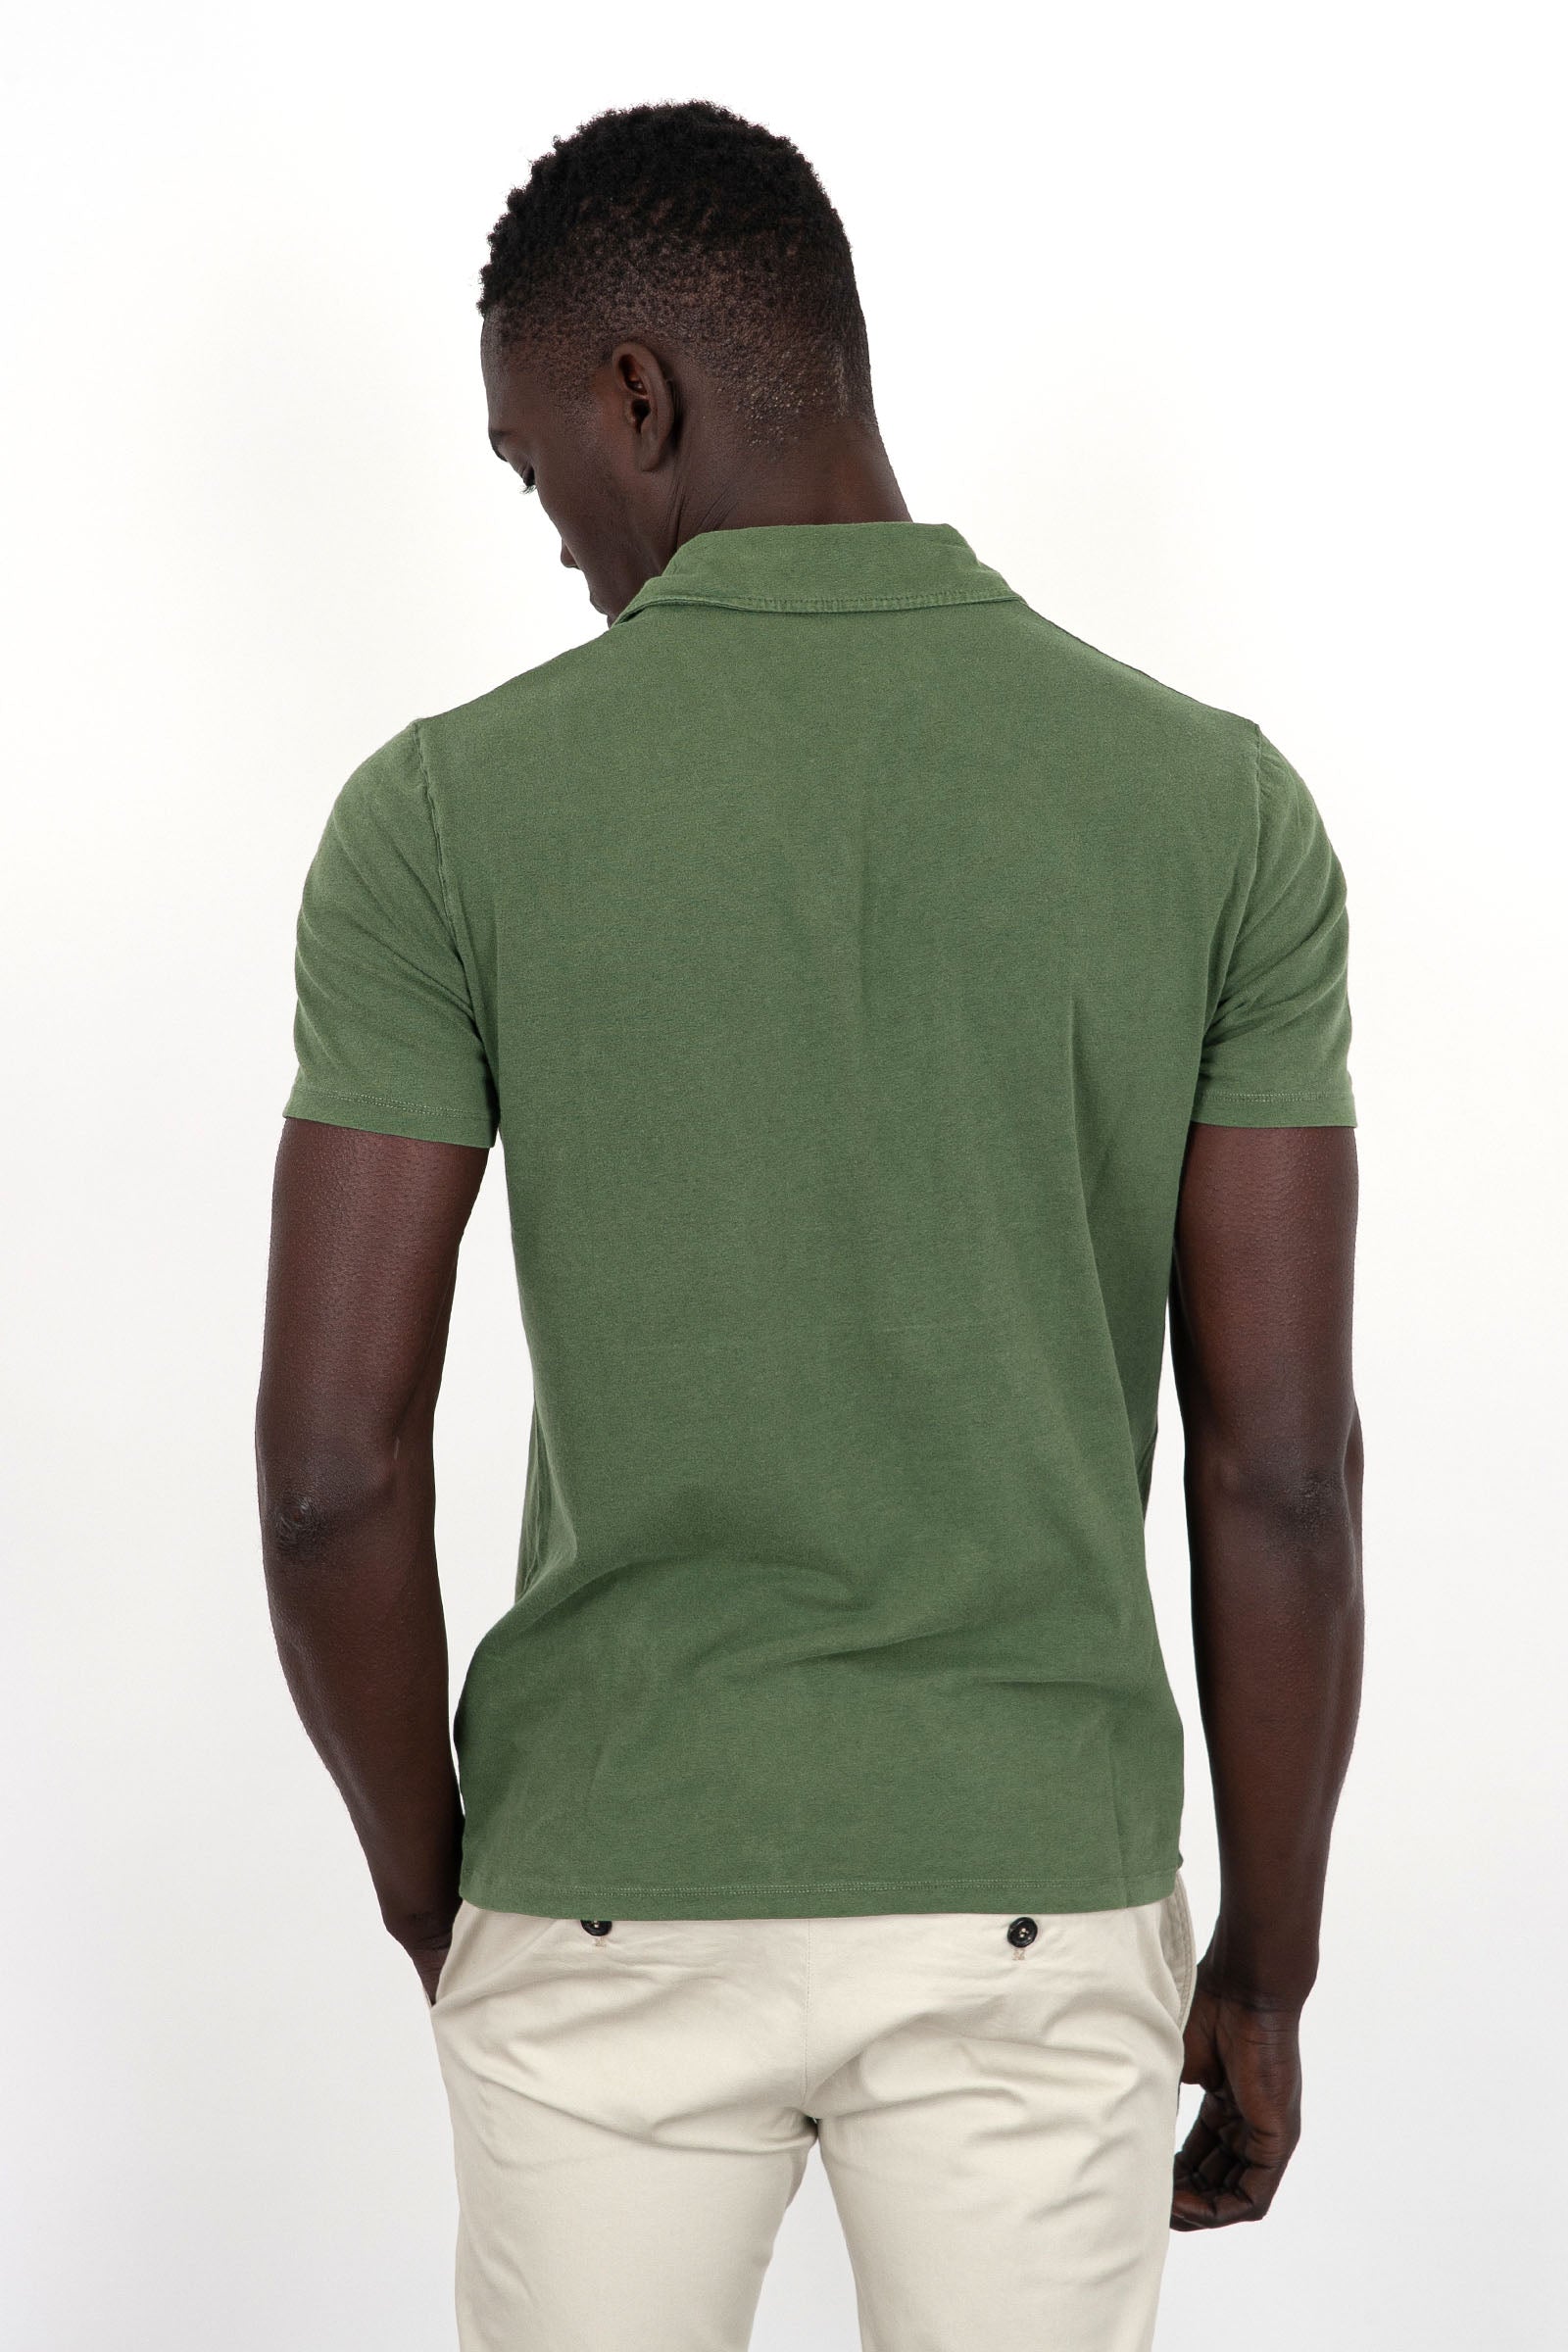 Majestic Filatures Organic Cotton/Elastane Green Polo Shirt - 4